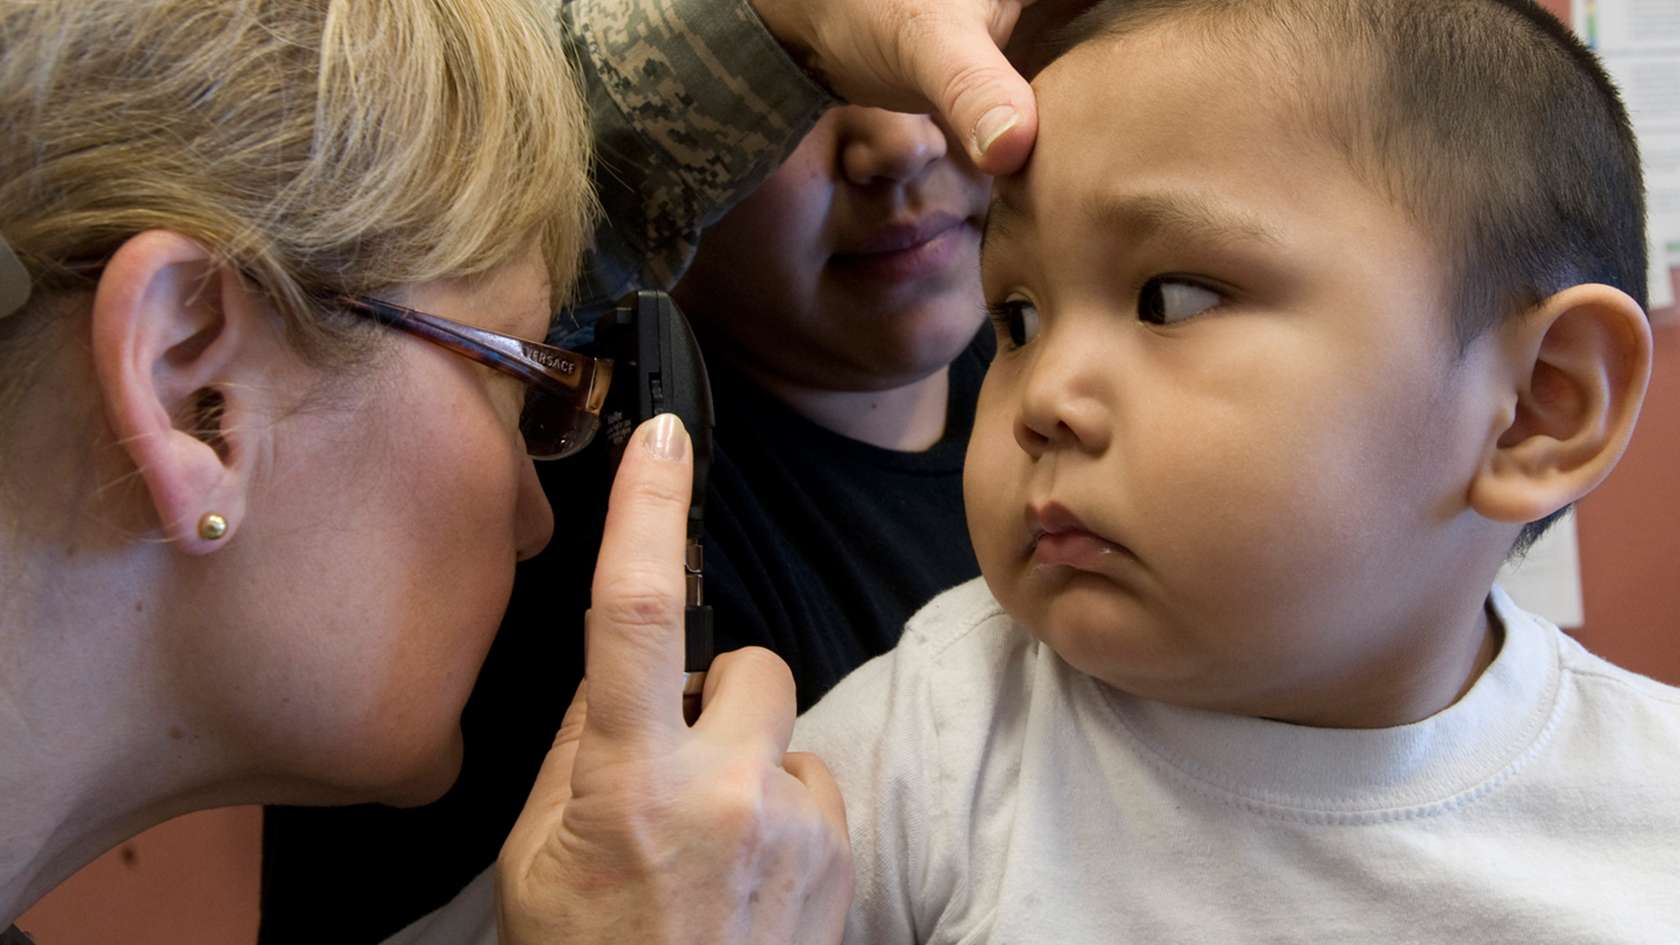 pediatric nurse examining child's eyes